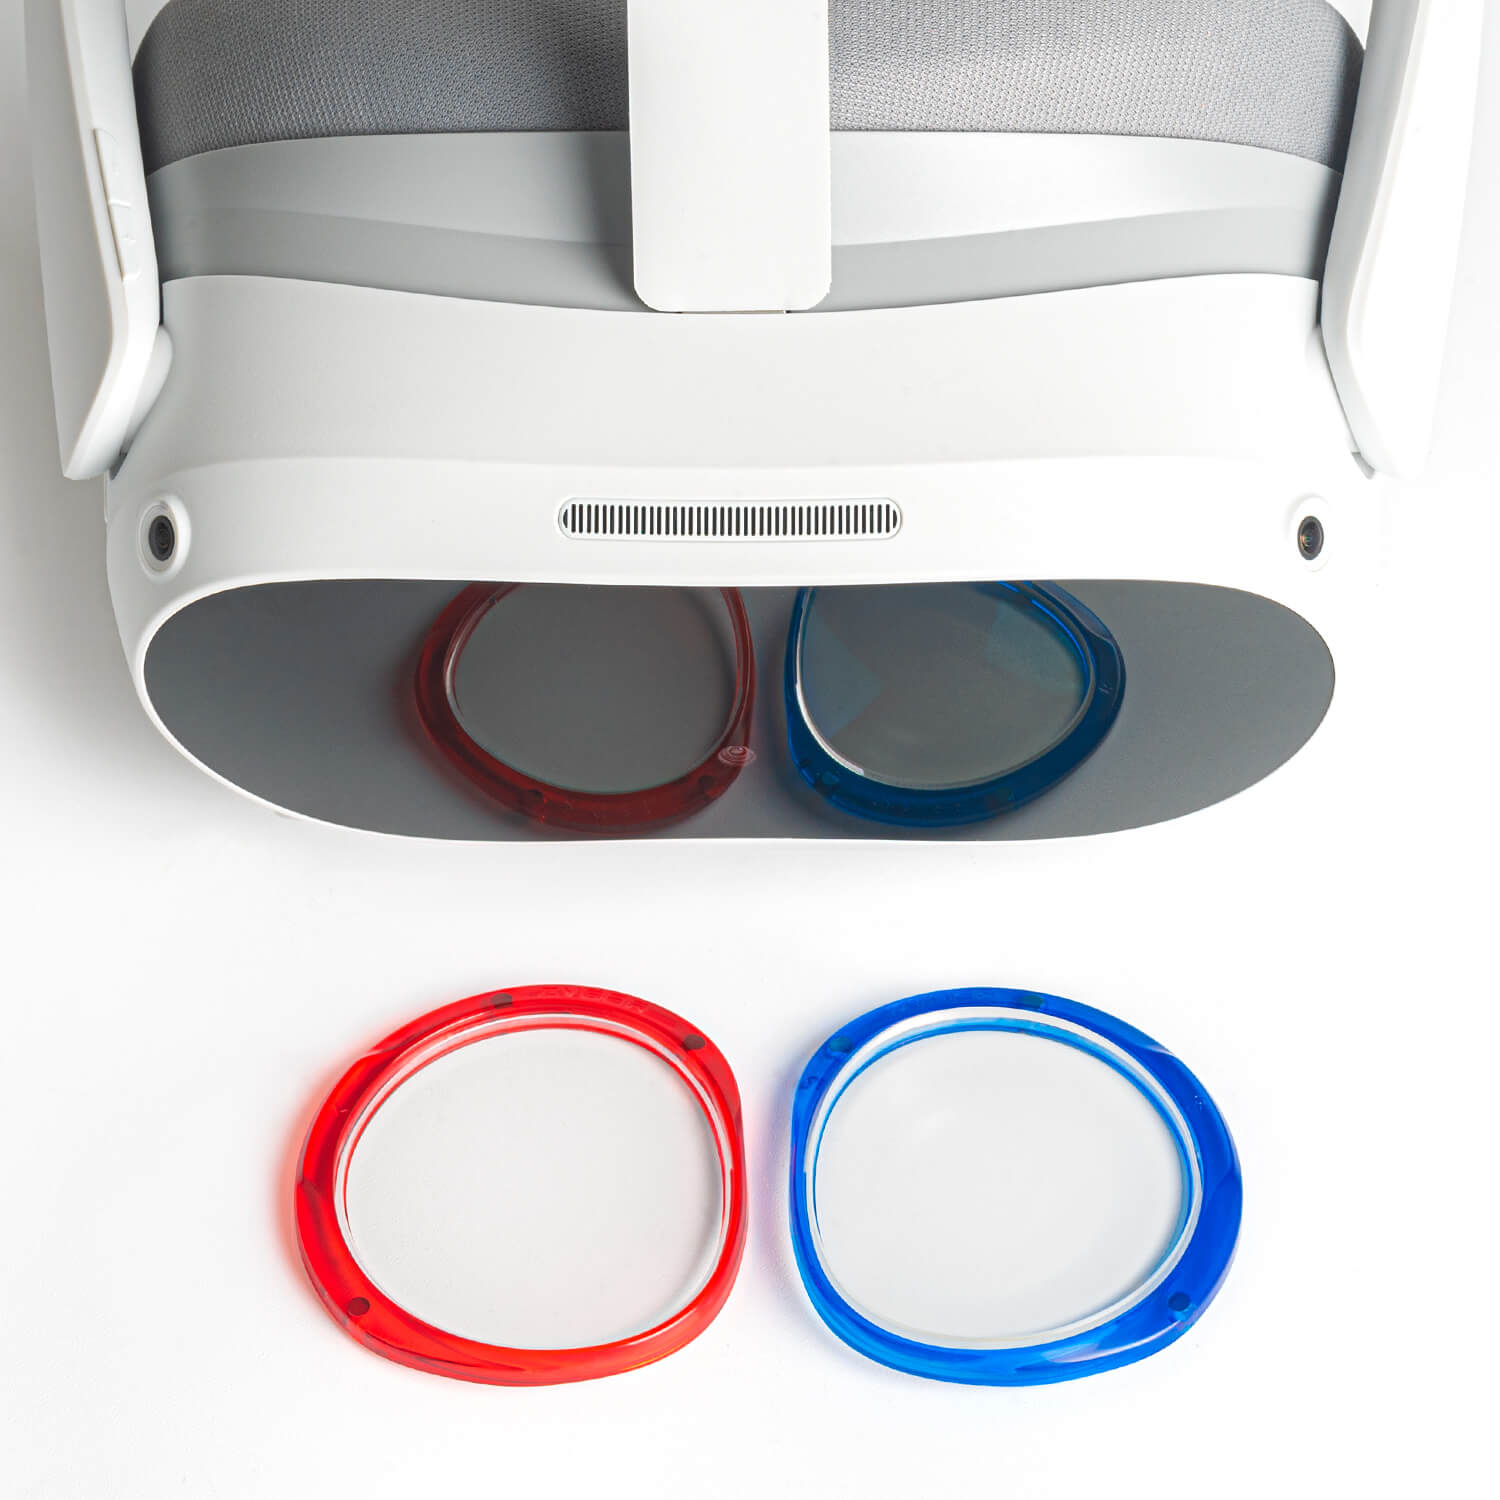 ZyberVR Pico 4 Prescription Lenses with Blue Light Protect